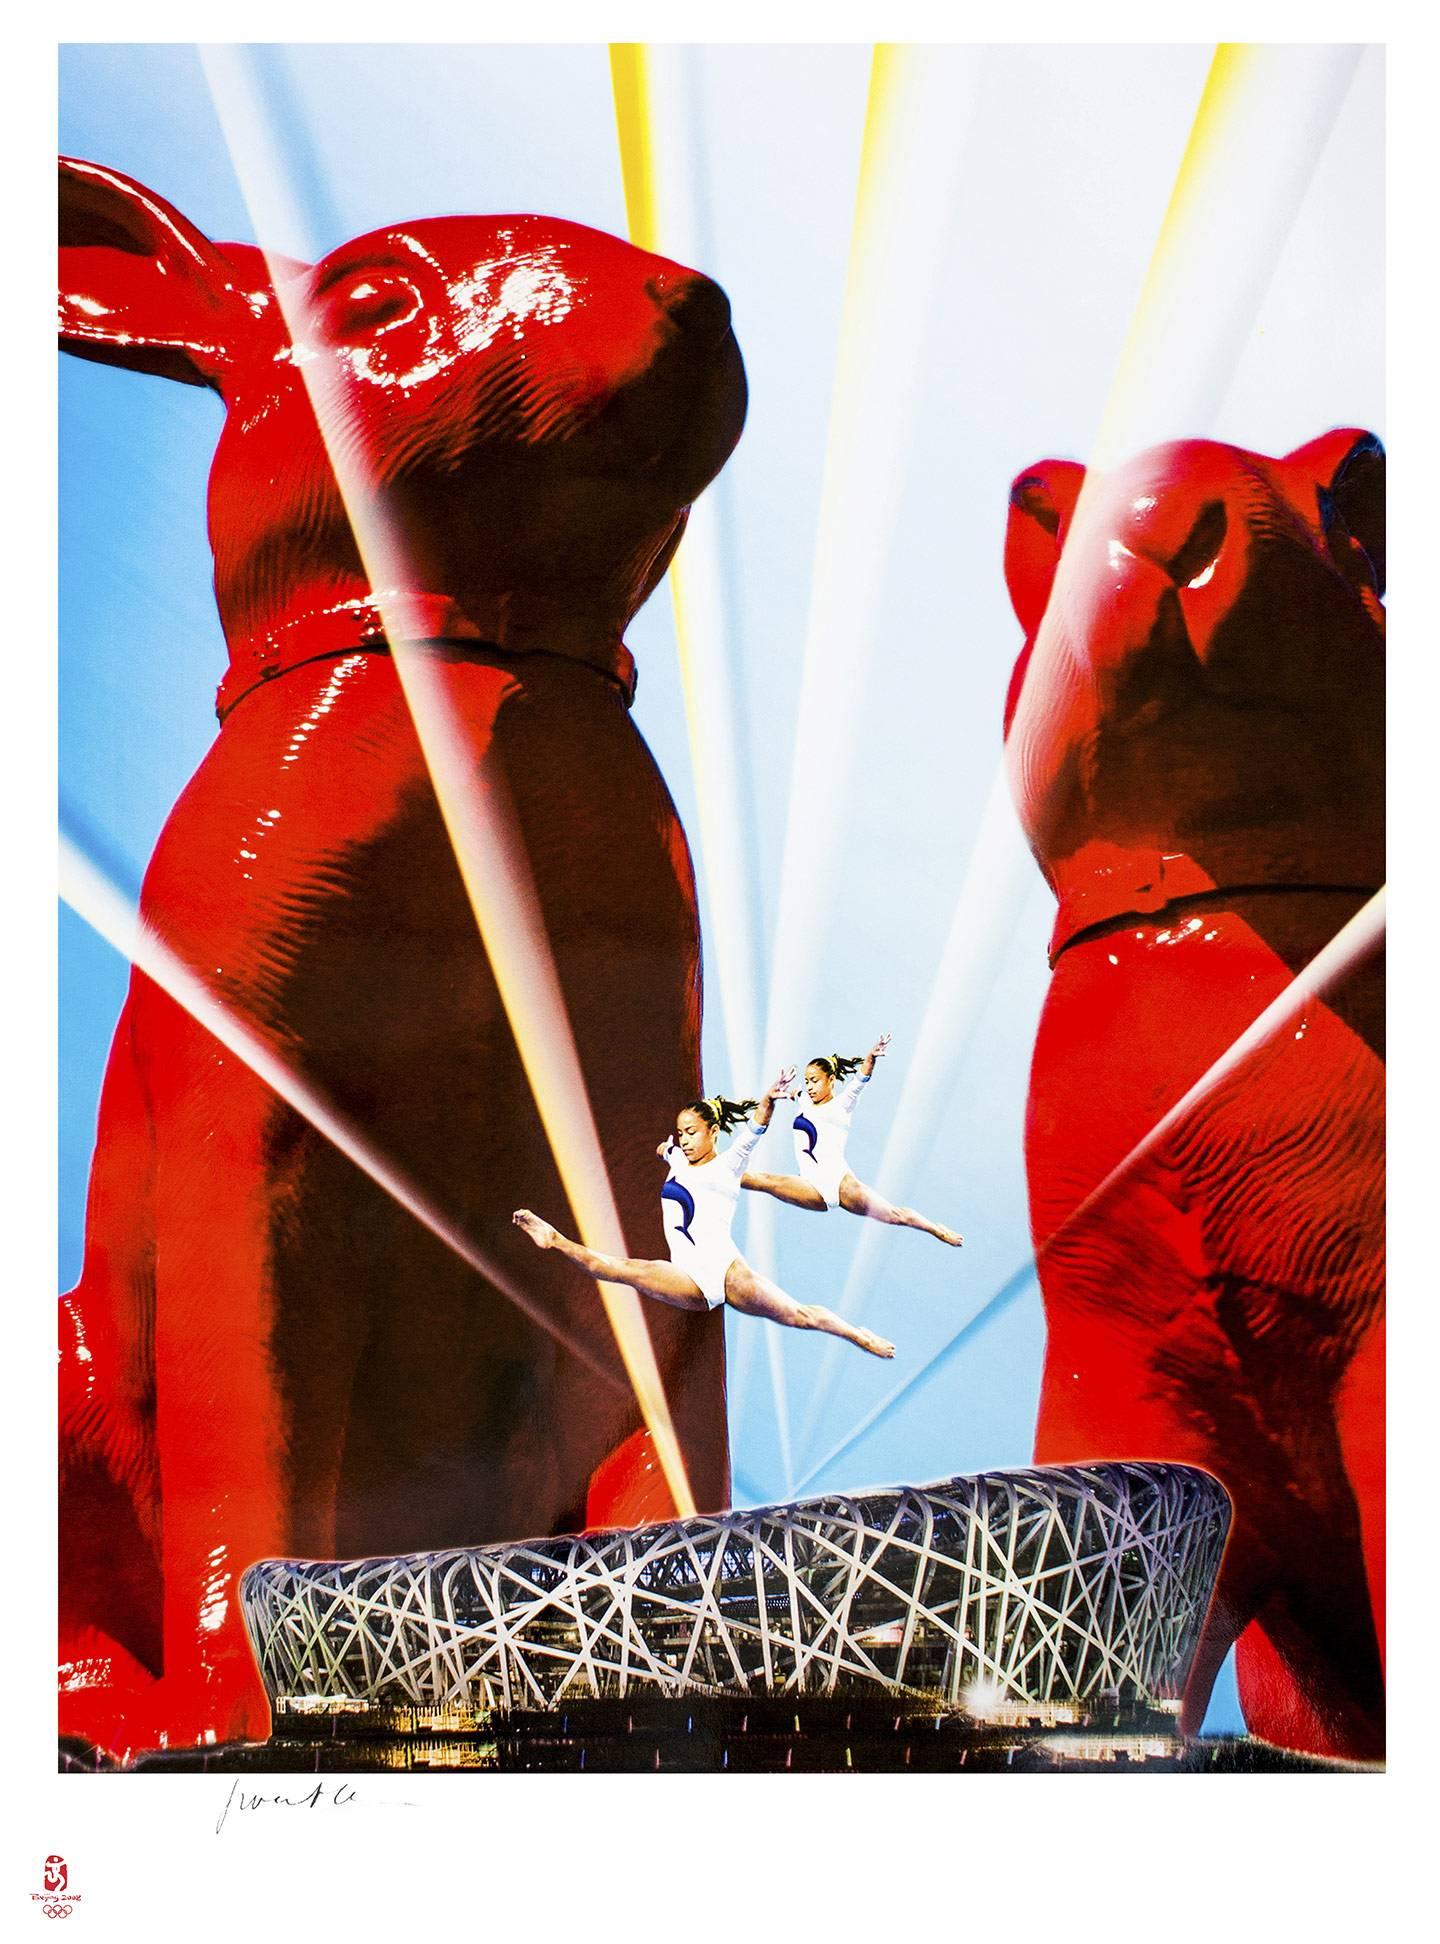 William Sweetlove Animal Print - Olympic Stars Between Cloned Rabbits - Original Litho by W. Sweetlove - 2008